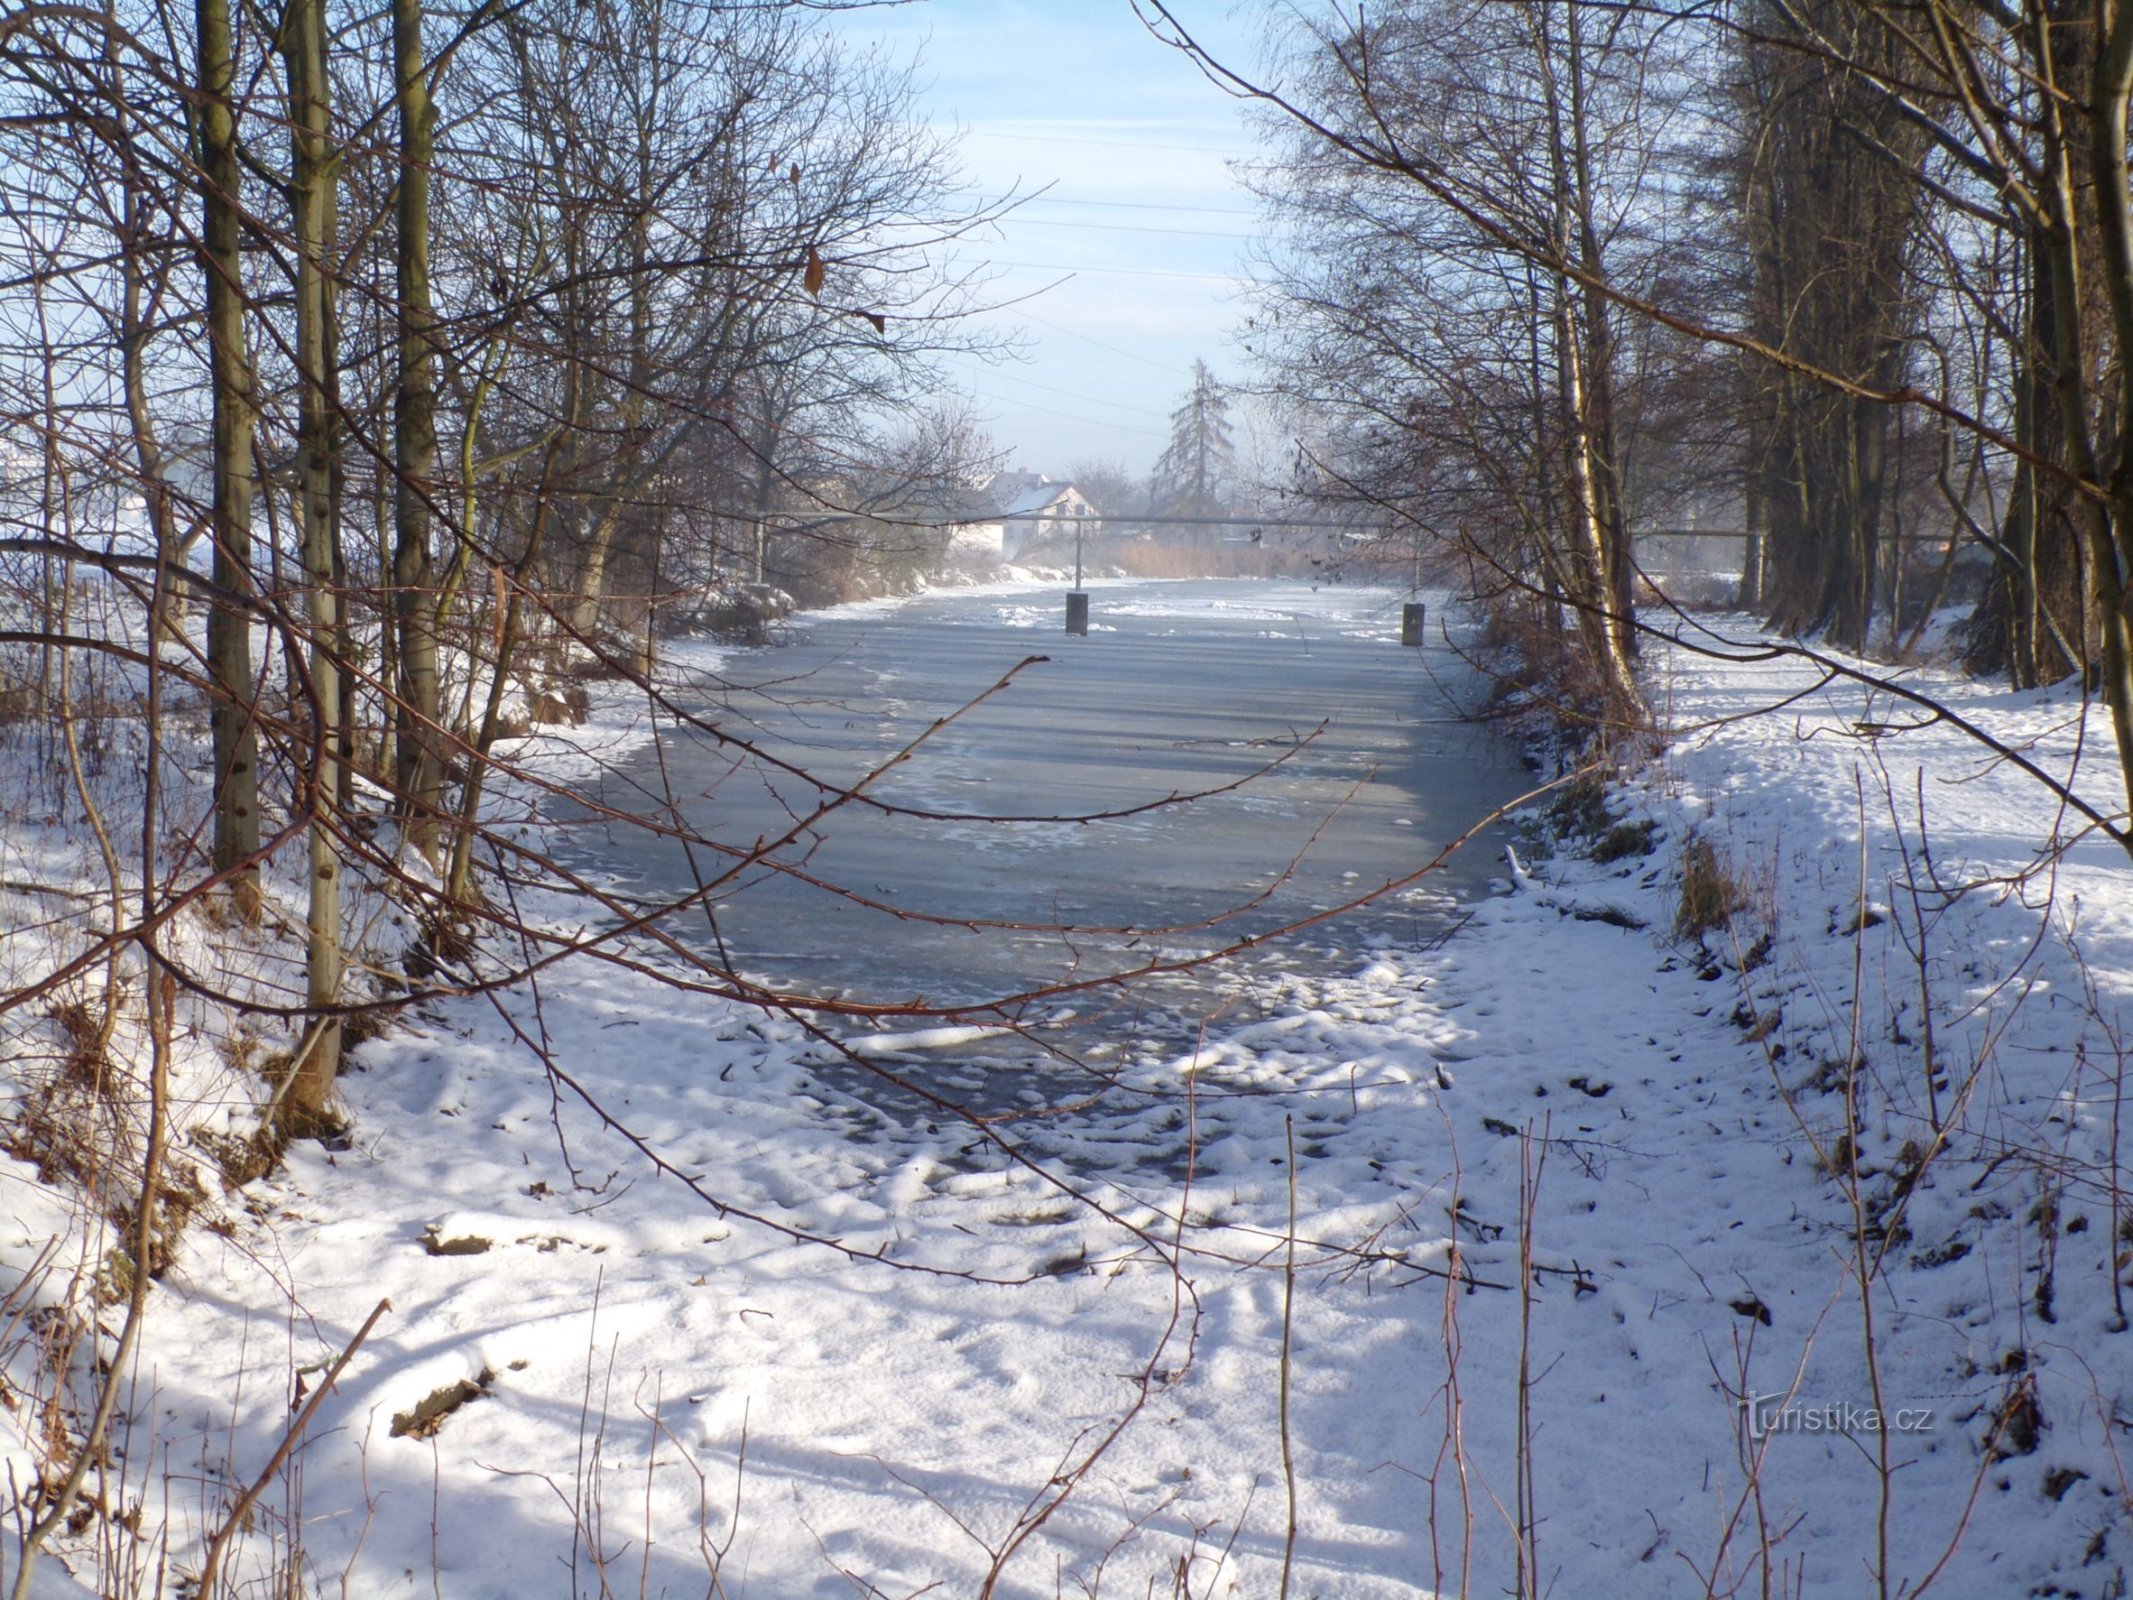 Teich unter Pálenkou (Hradec Králové, 20.1.2021)